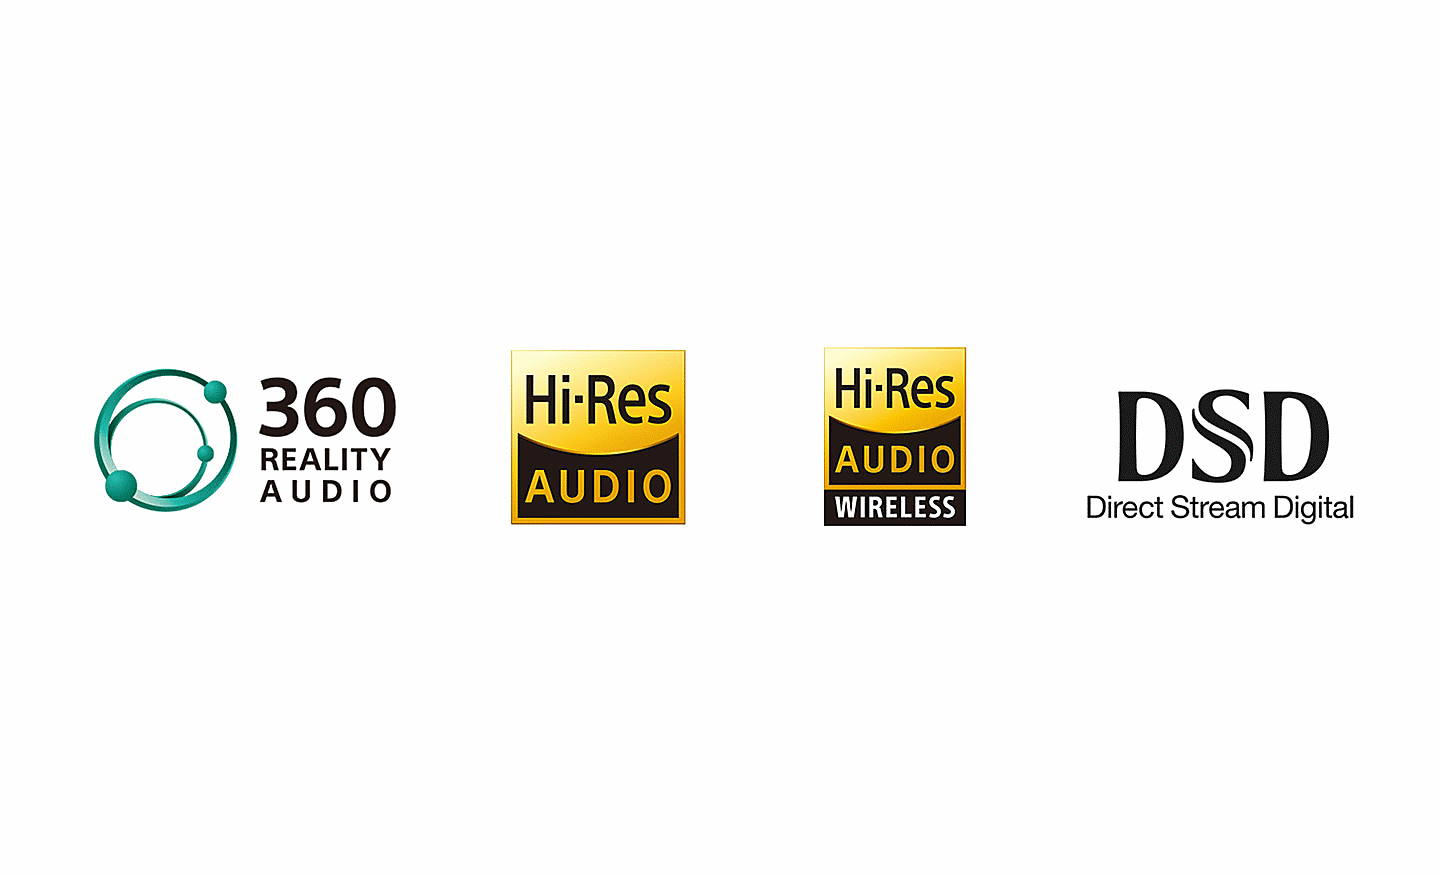 360 Reality Audio logotip, Hi-Res Audio logotip, Hi-Res Audio Wireless logotip, DSD Direct Stream Digital logotip